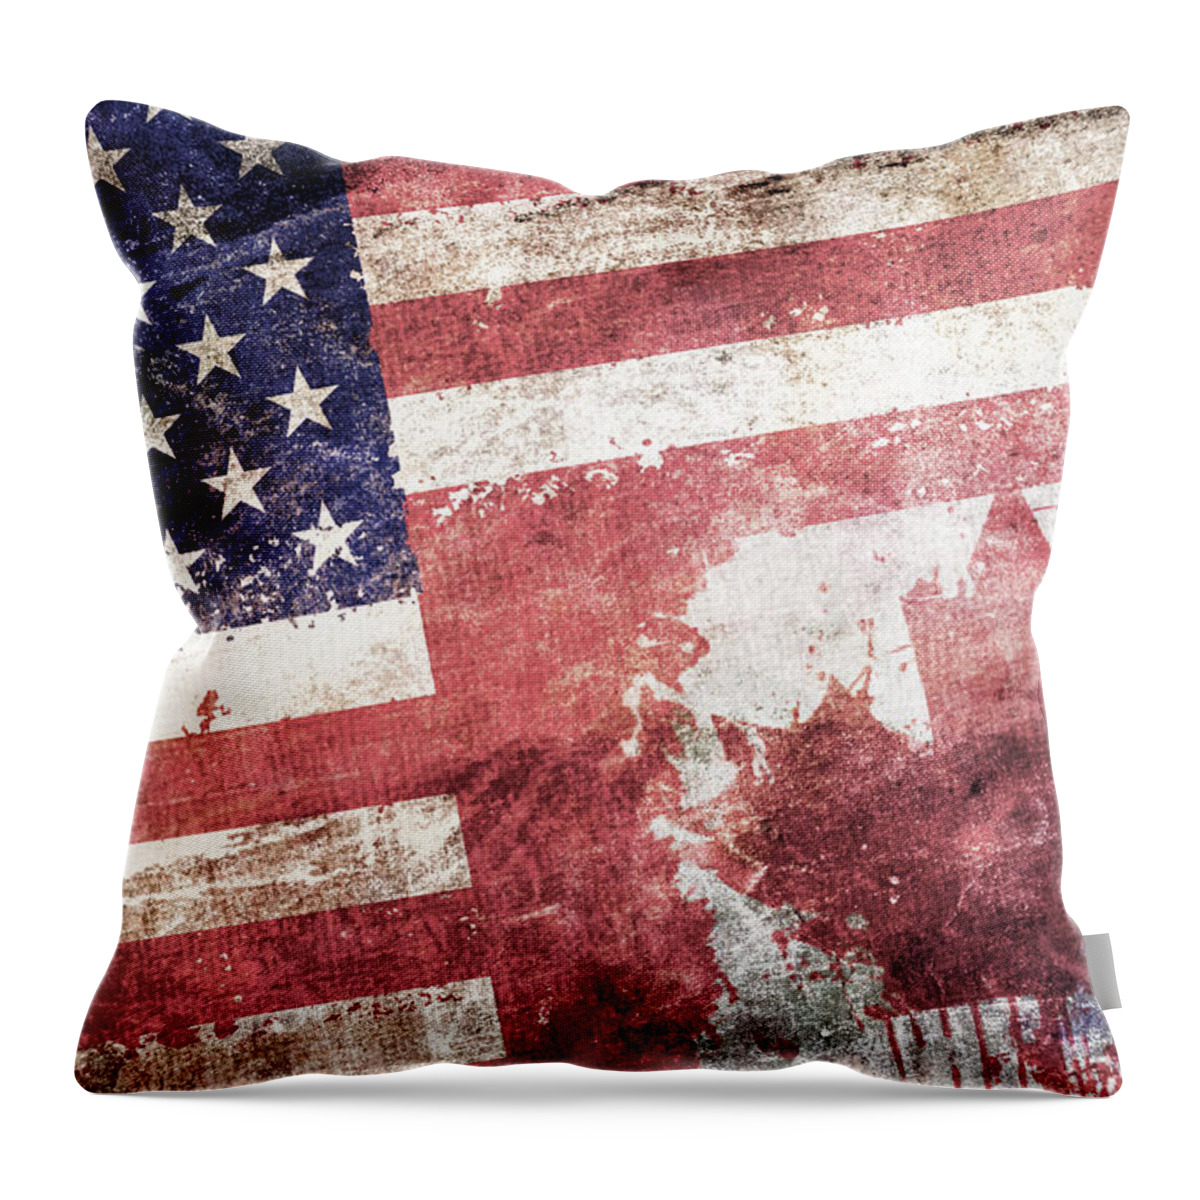 Composite Throw Pillow featuring the digital art Co-Patriots by Az Jackson